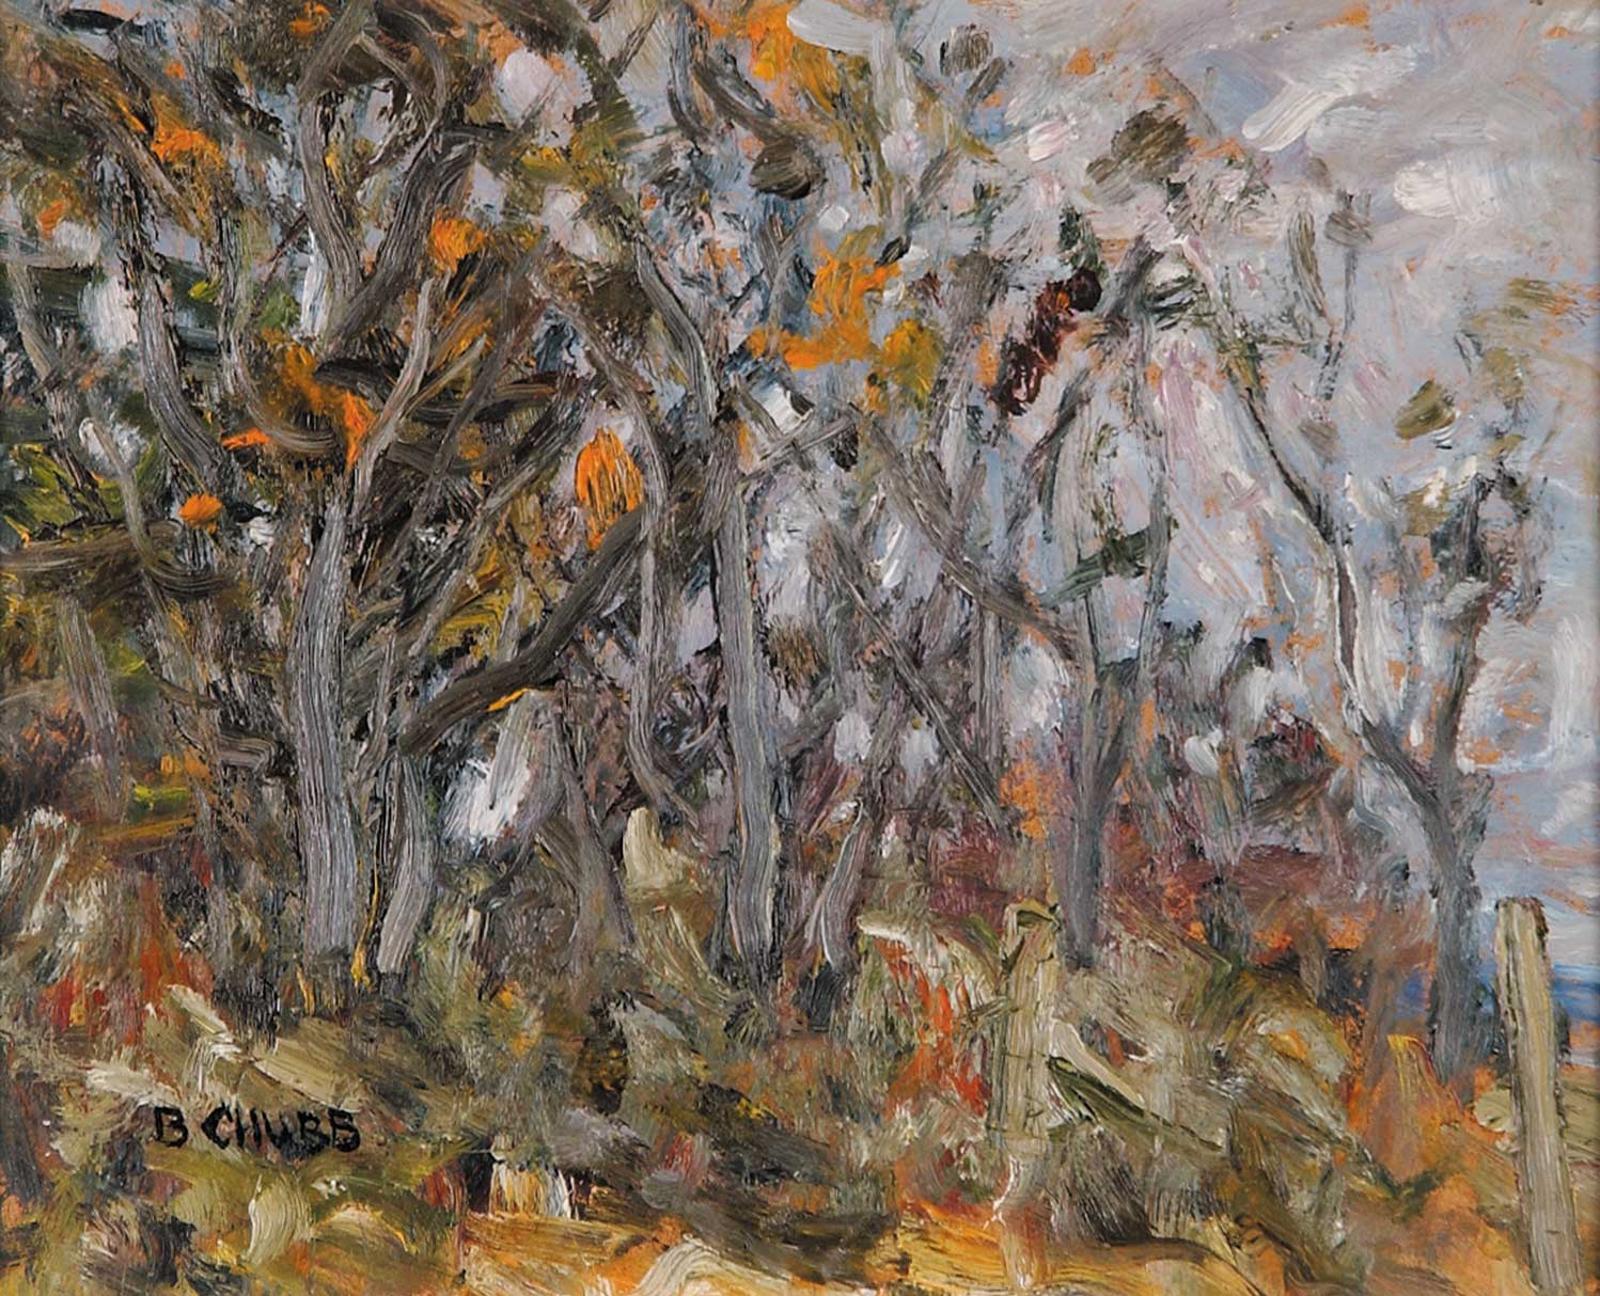 Bryan Chubb (1947) - Landscape, Georgia Strait